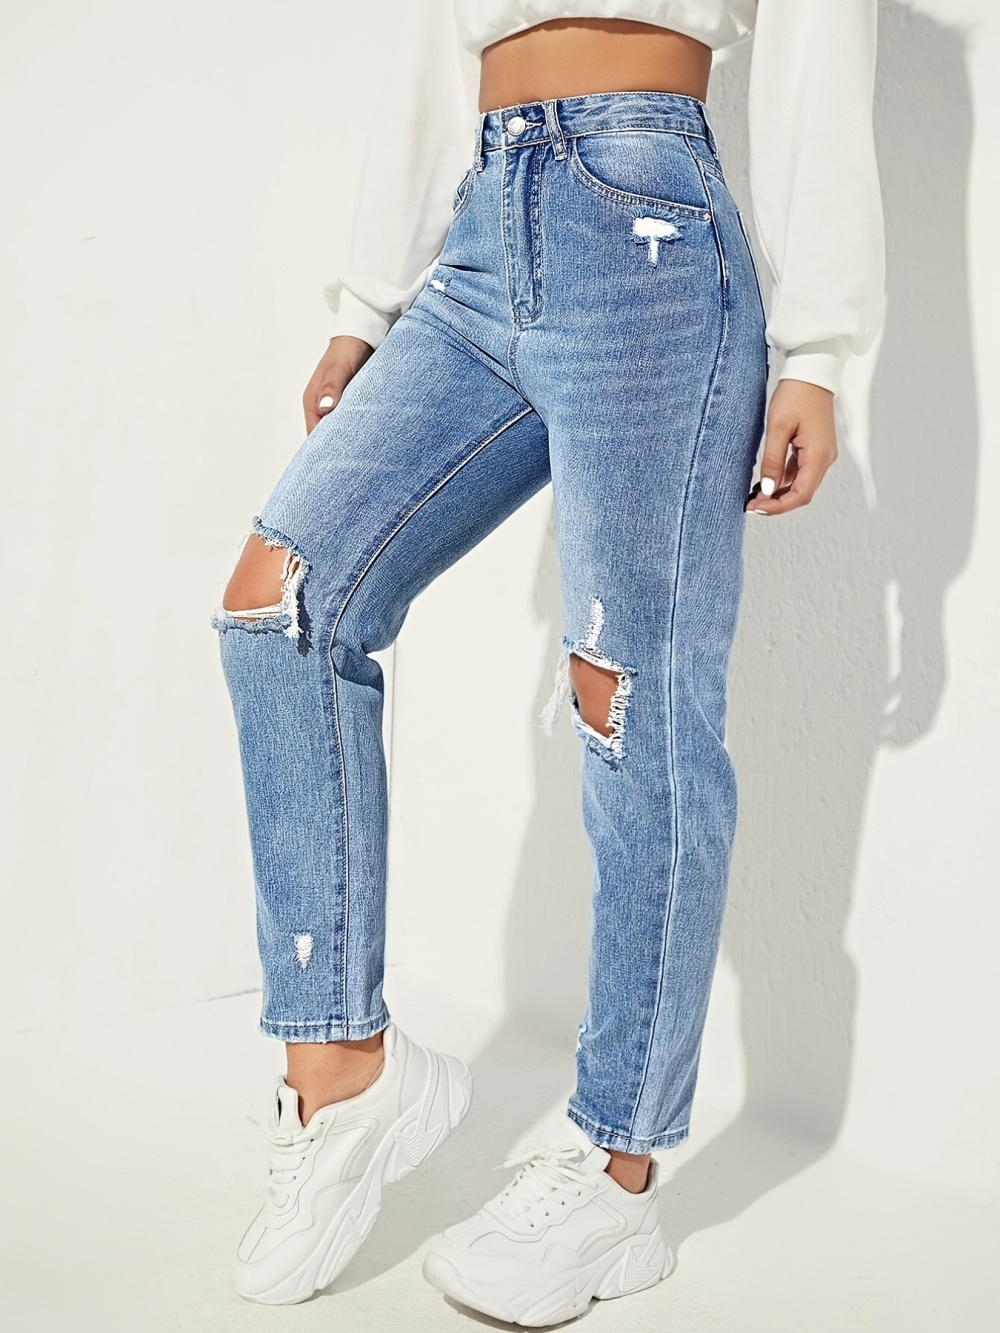 High waist feet Casual slim jeans for women